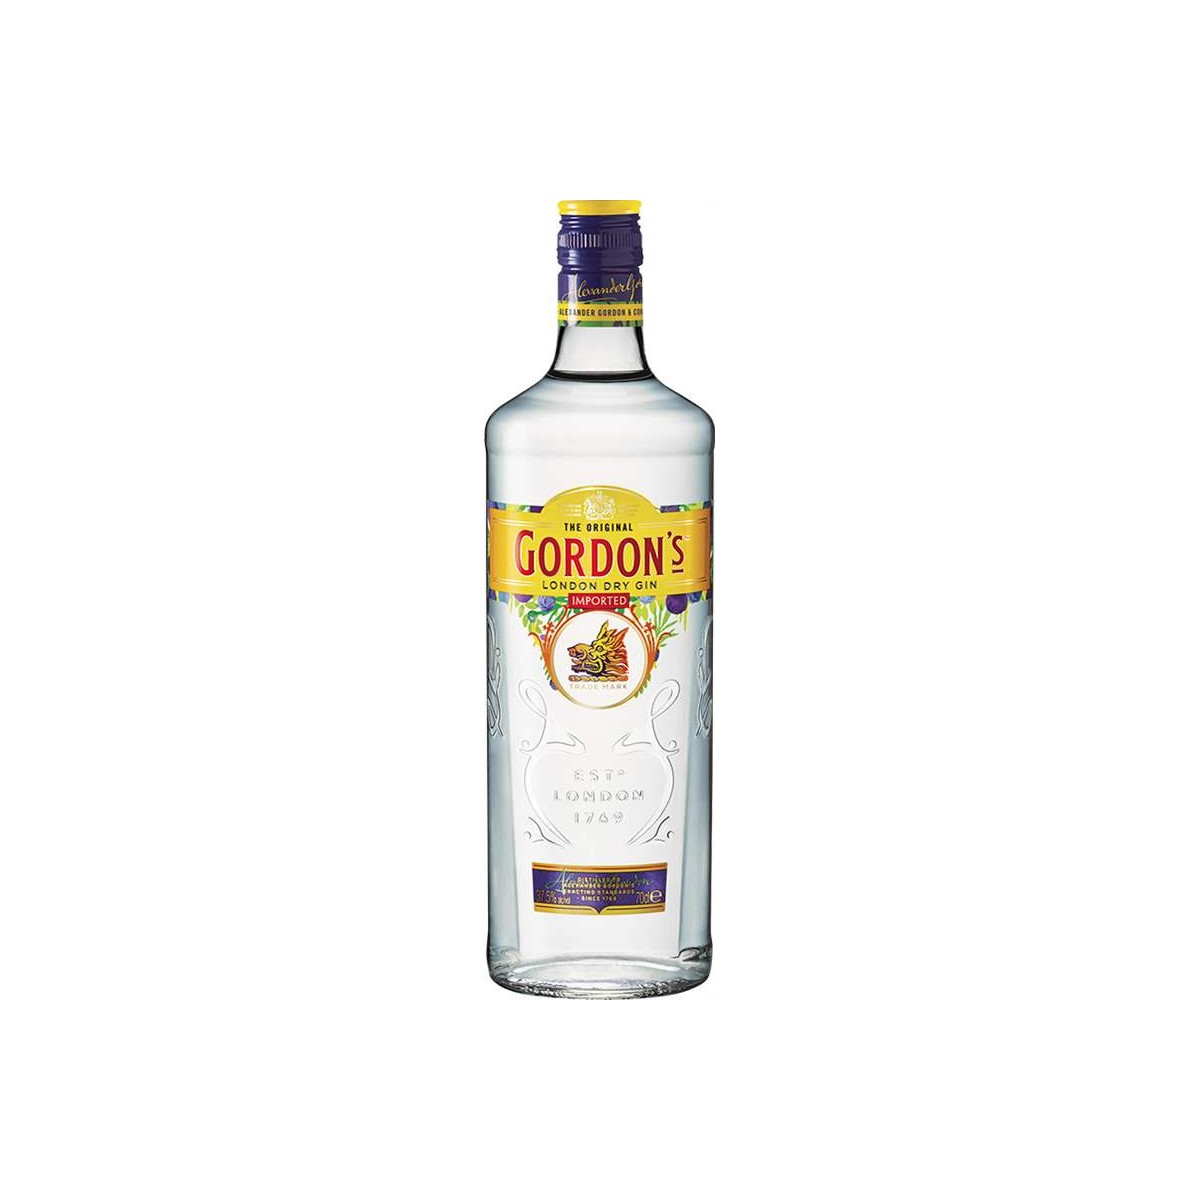 Gordon's Dry Gin 0,7l